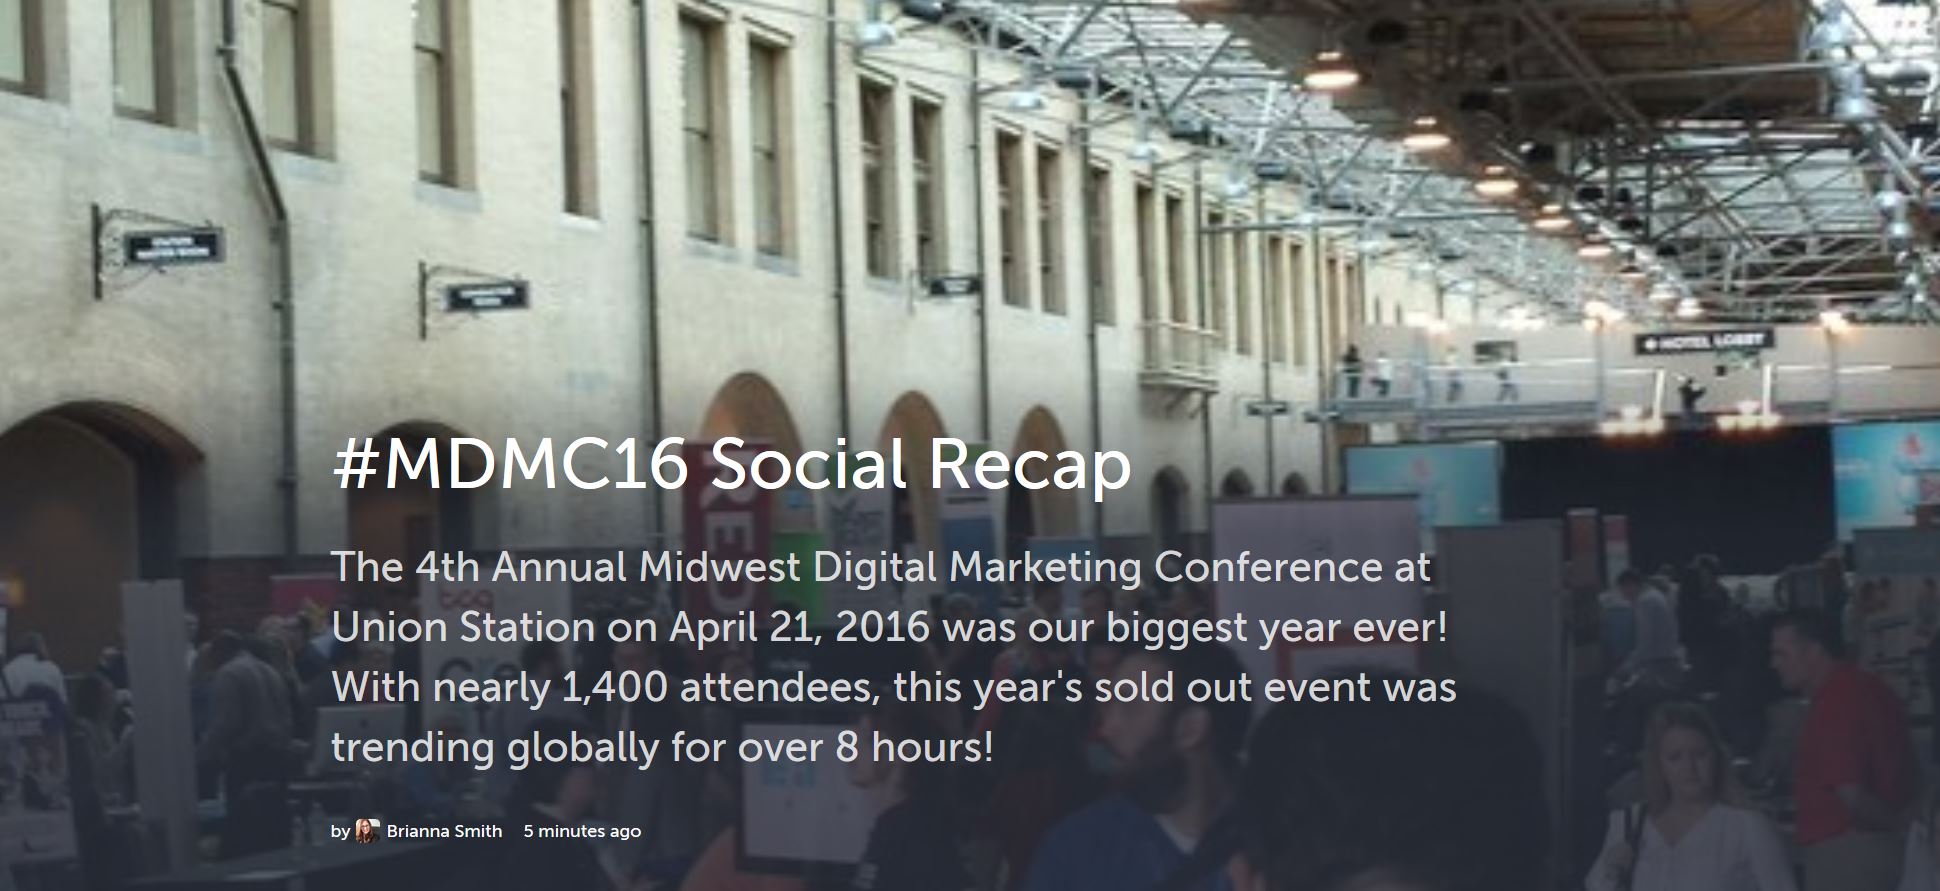 mdmc16 social recap